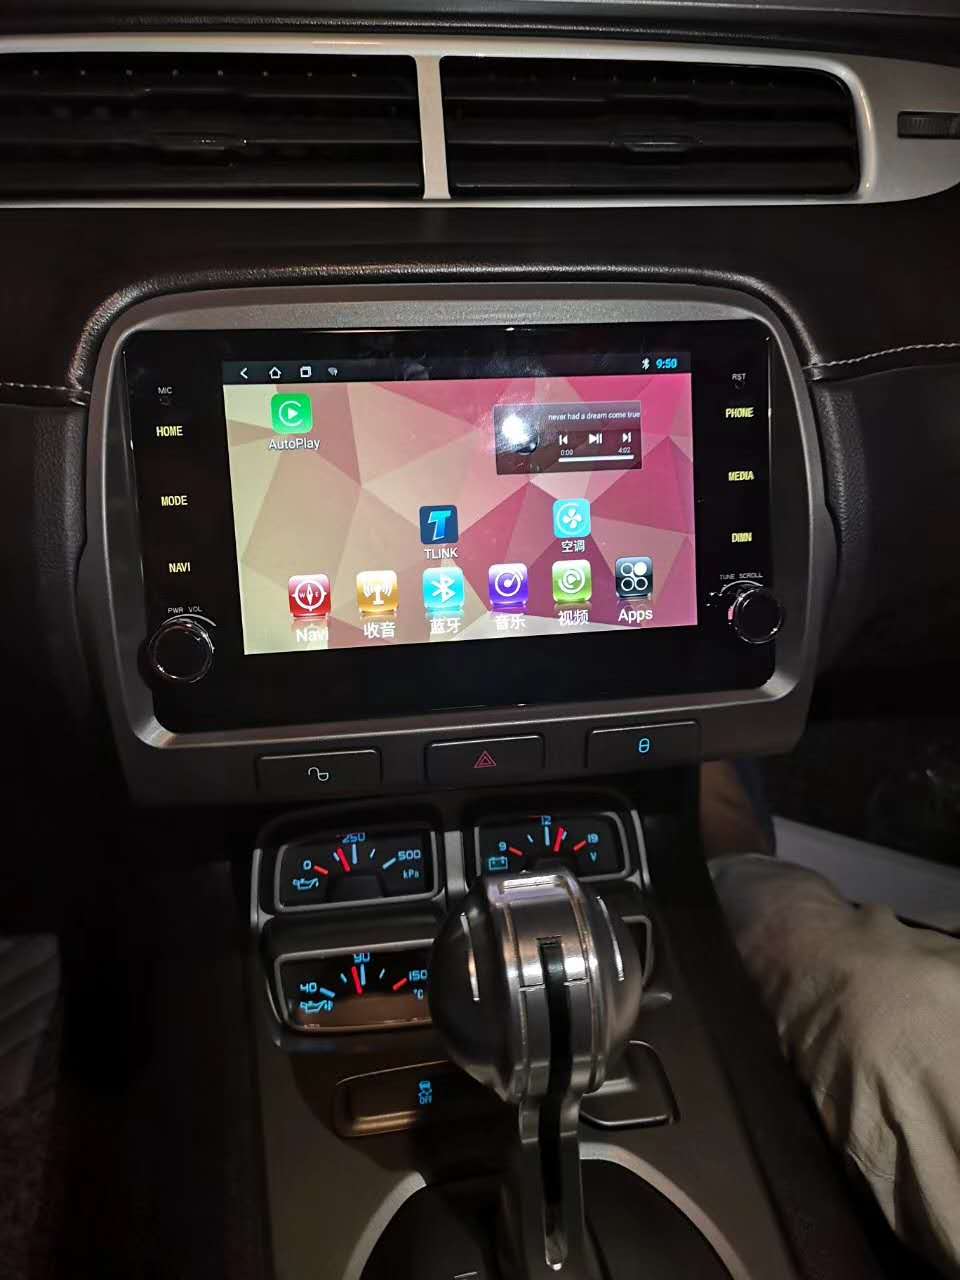 7" Quad core Android 8.1 Navigation Radio for Chevrolet Camaro 2009 - 2015